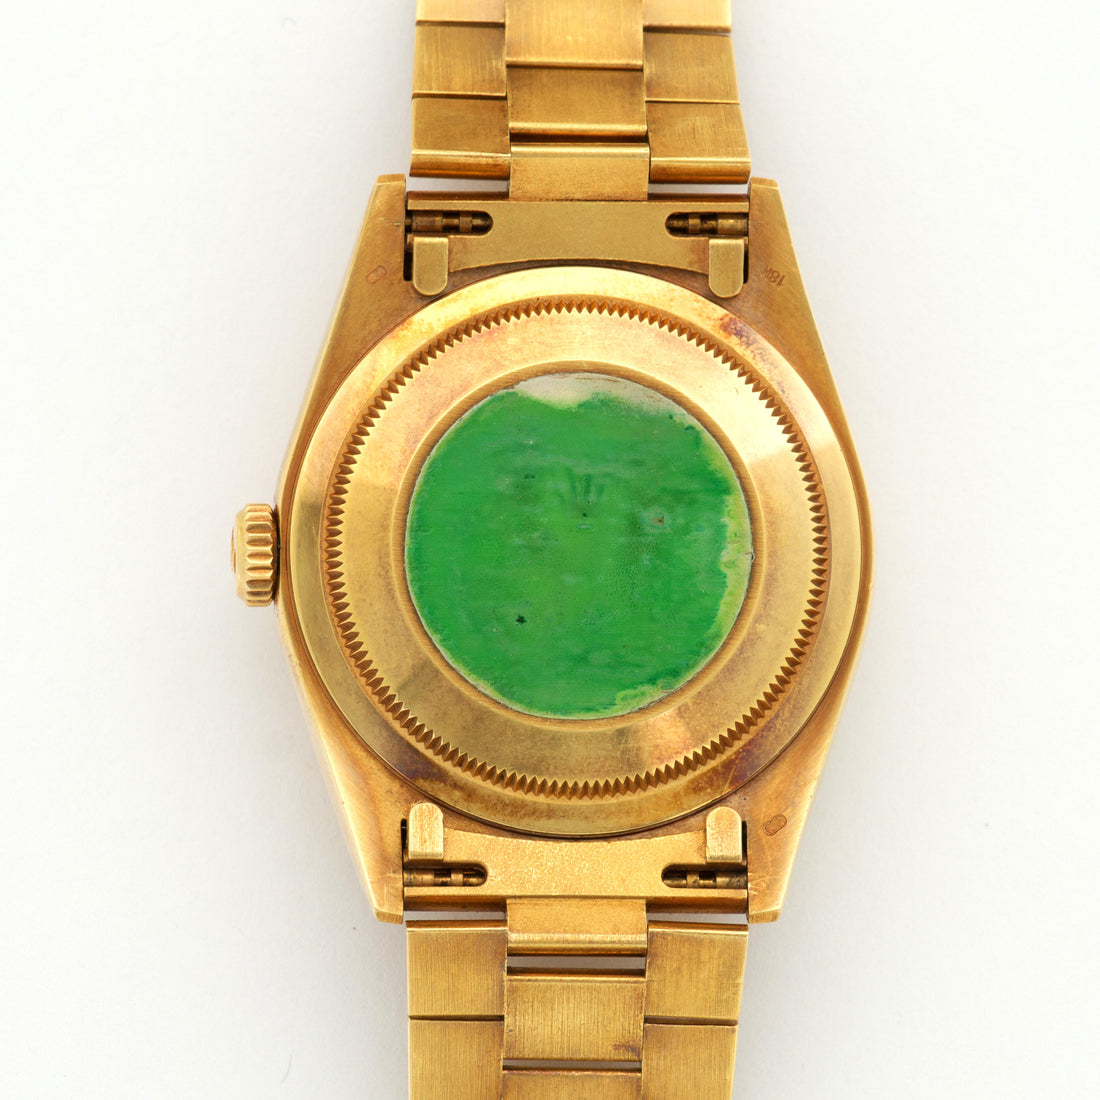 Rolex Yellow Gold Day-Date Baguette Diamond Watch